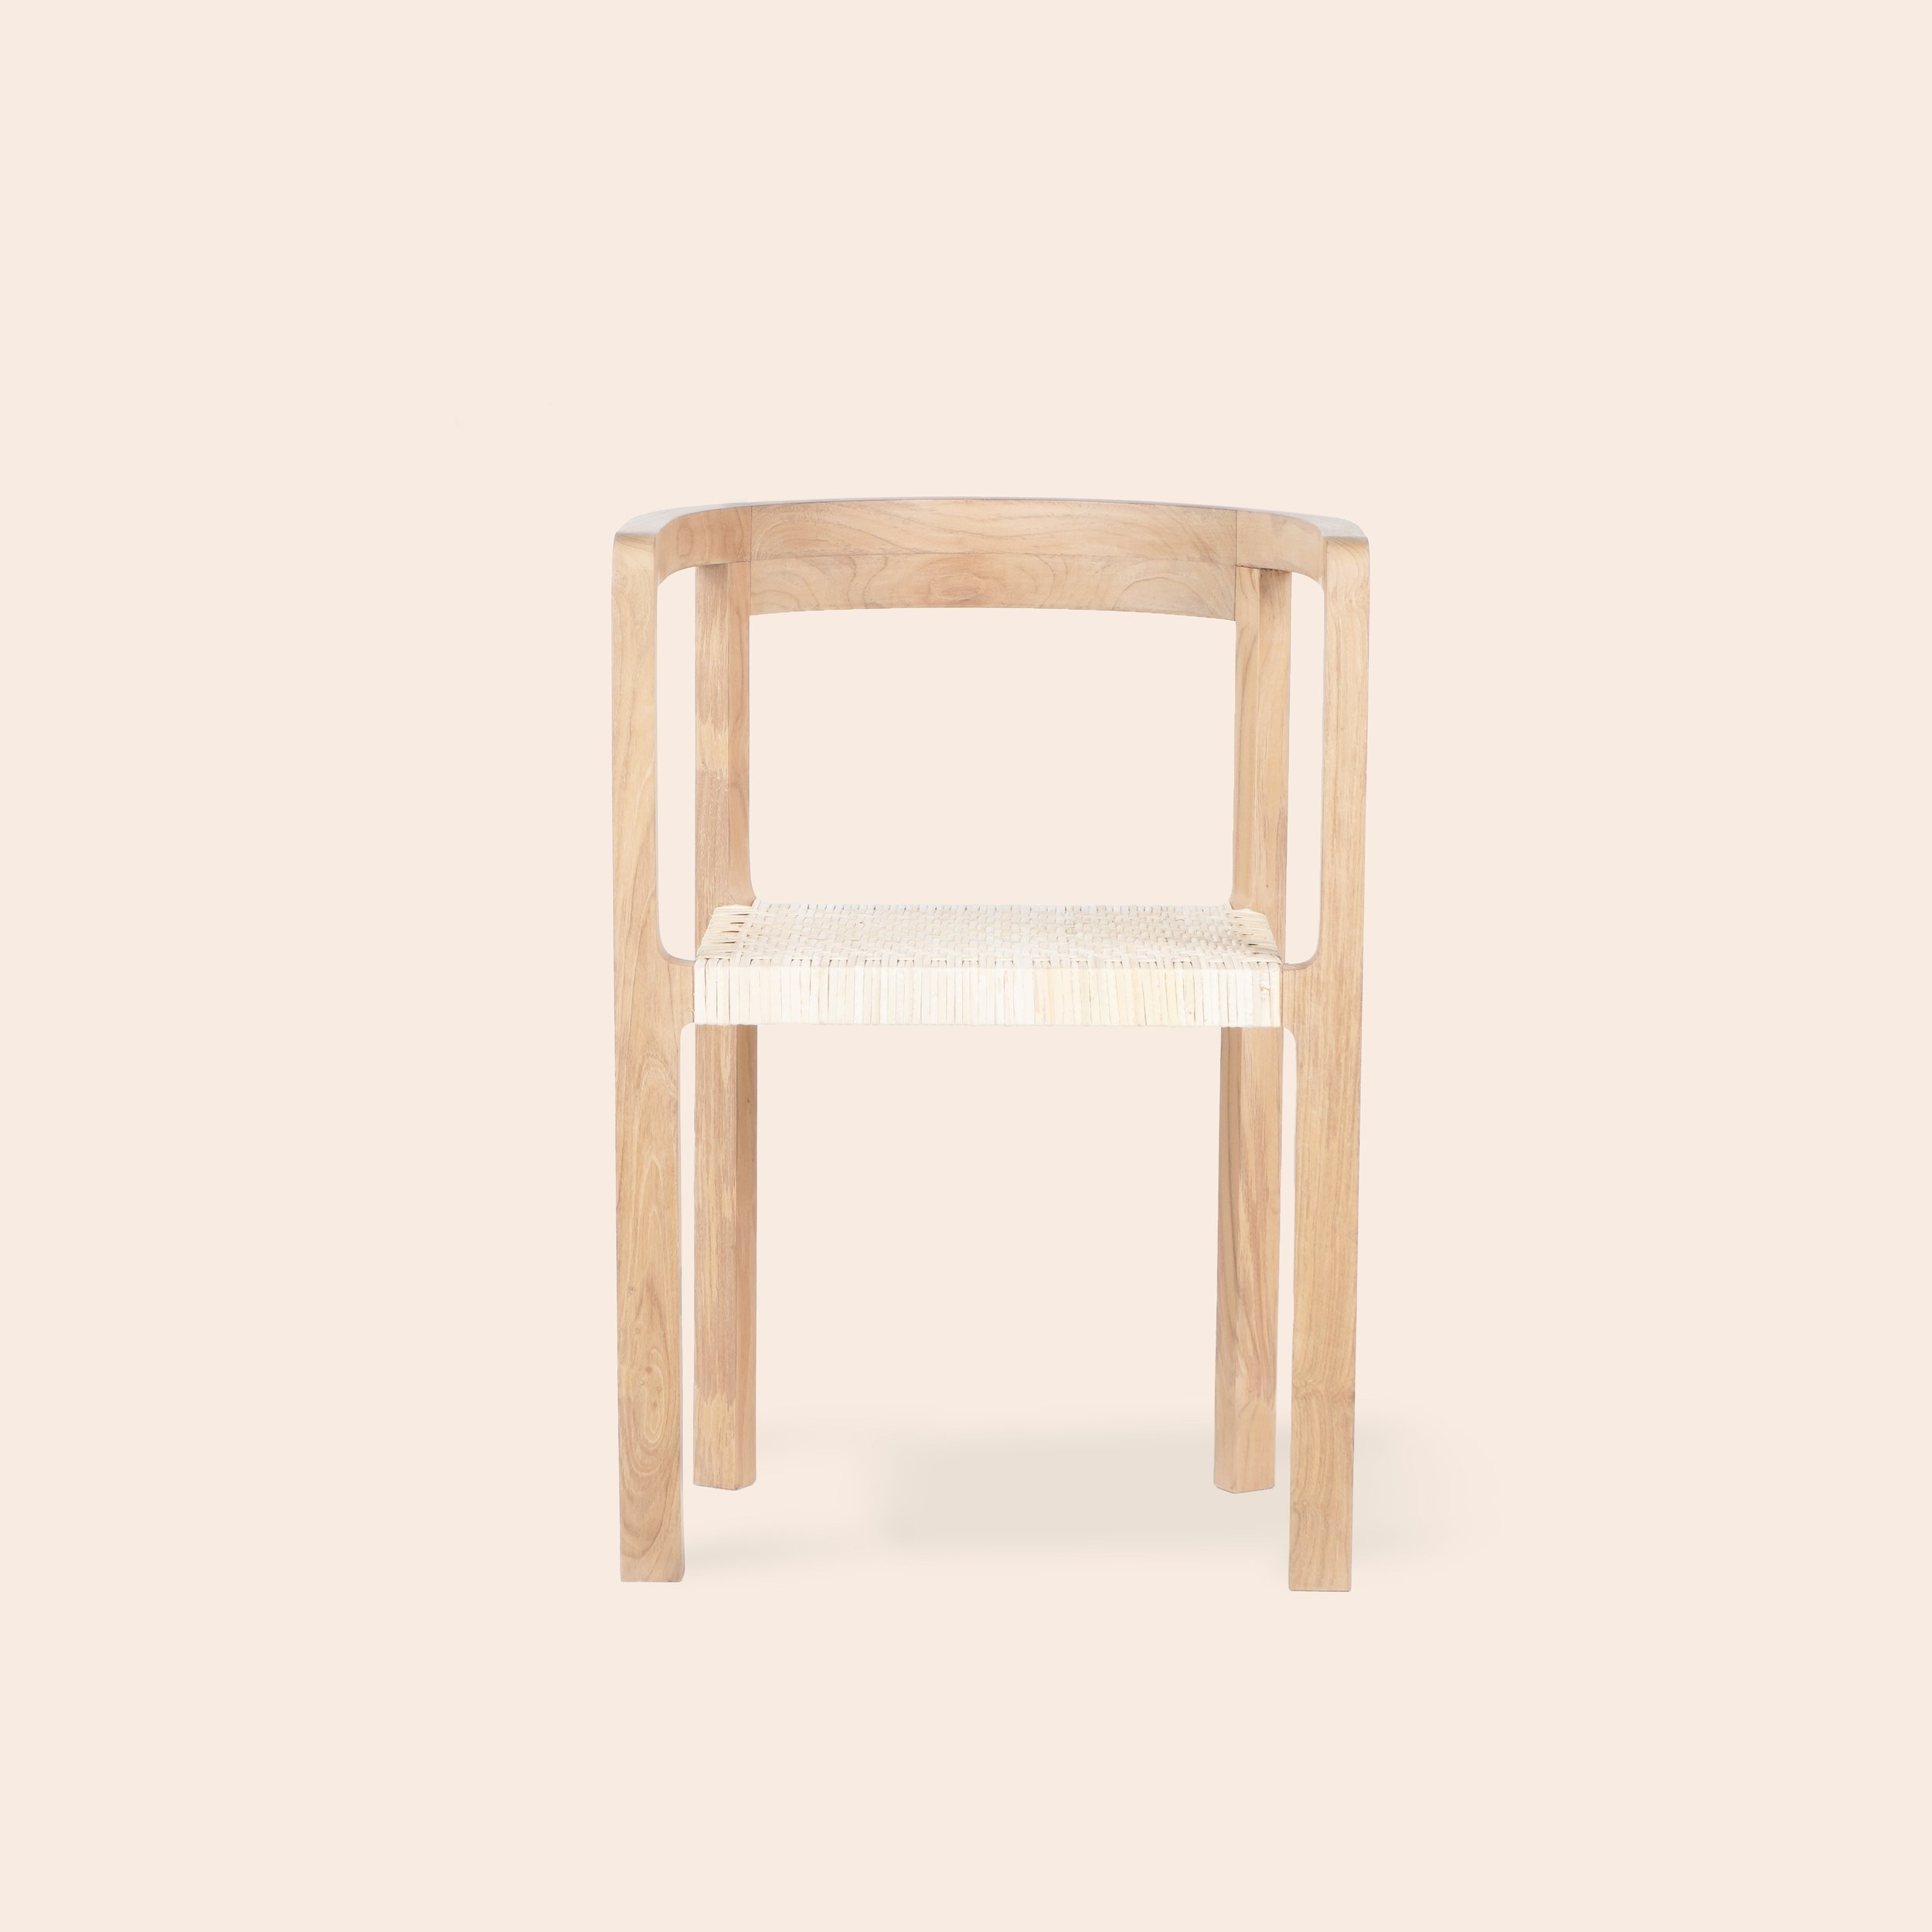 New Design Begitu Chair.jpg